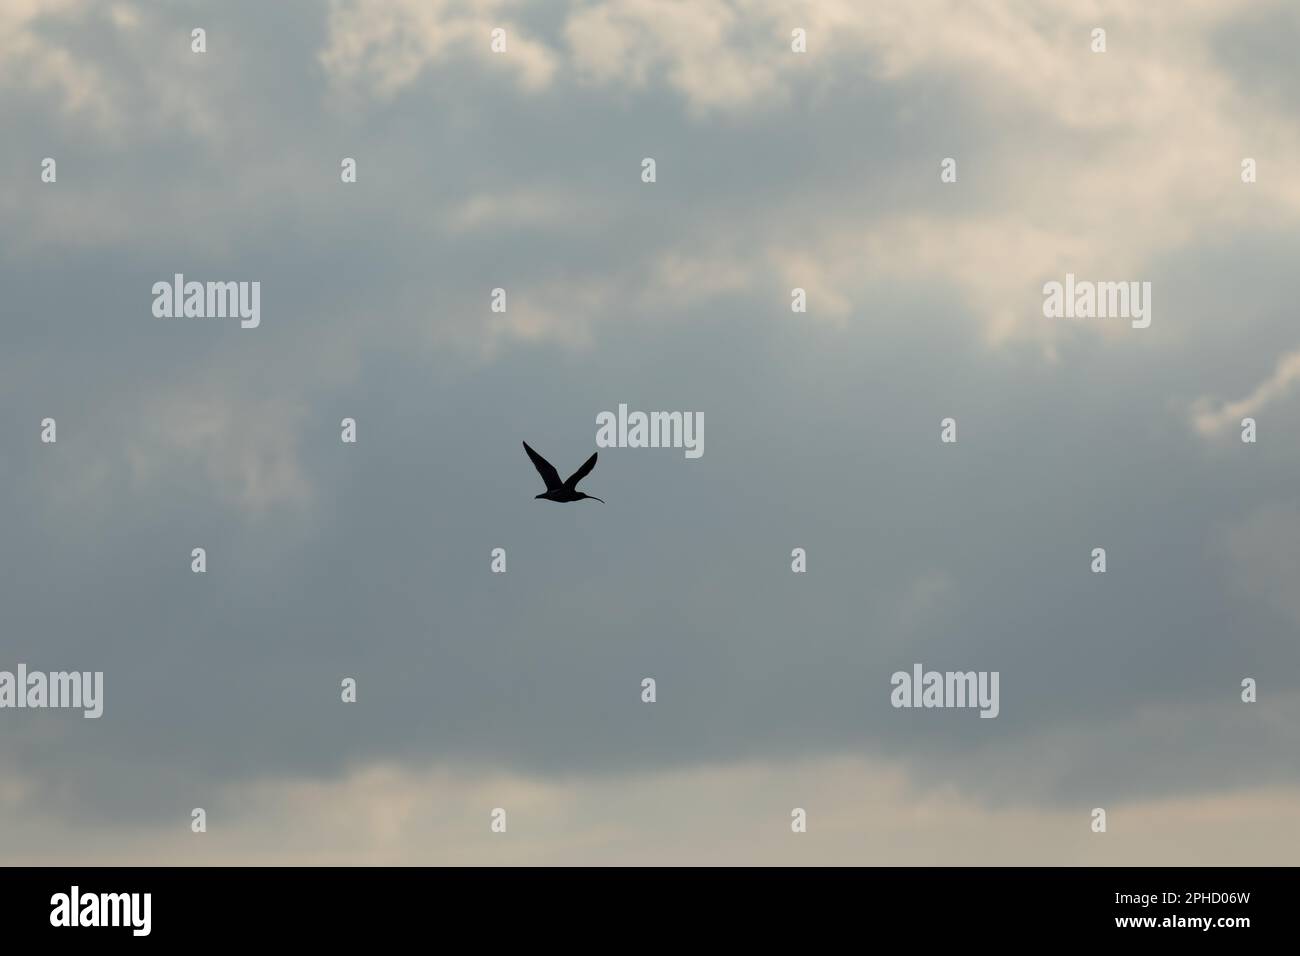 A curlew (Numenius arquata) flies across a cloudy sky in Dobcross, Oldham, UK Stock Photo